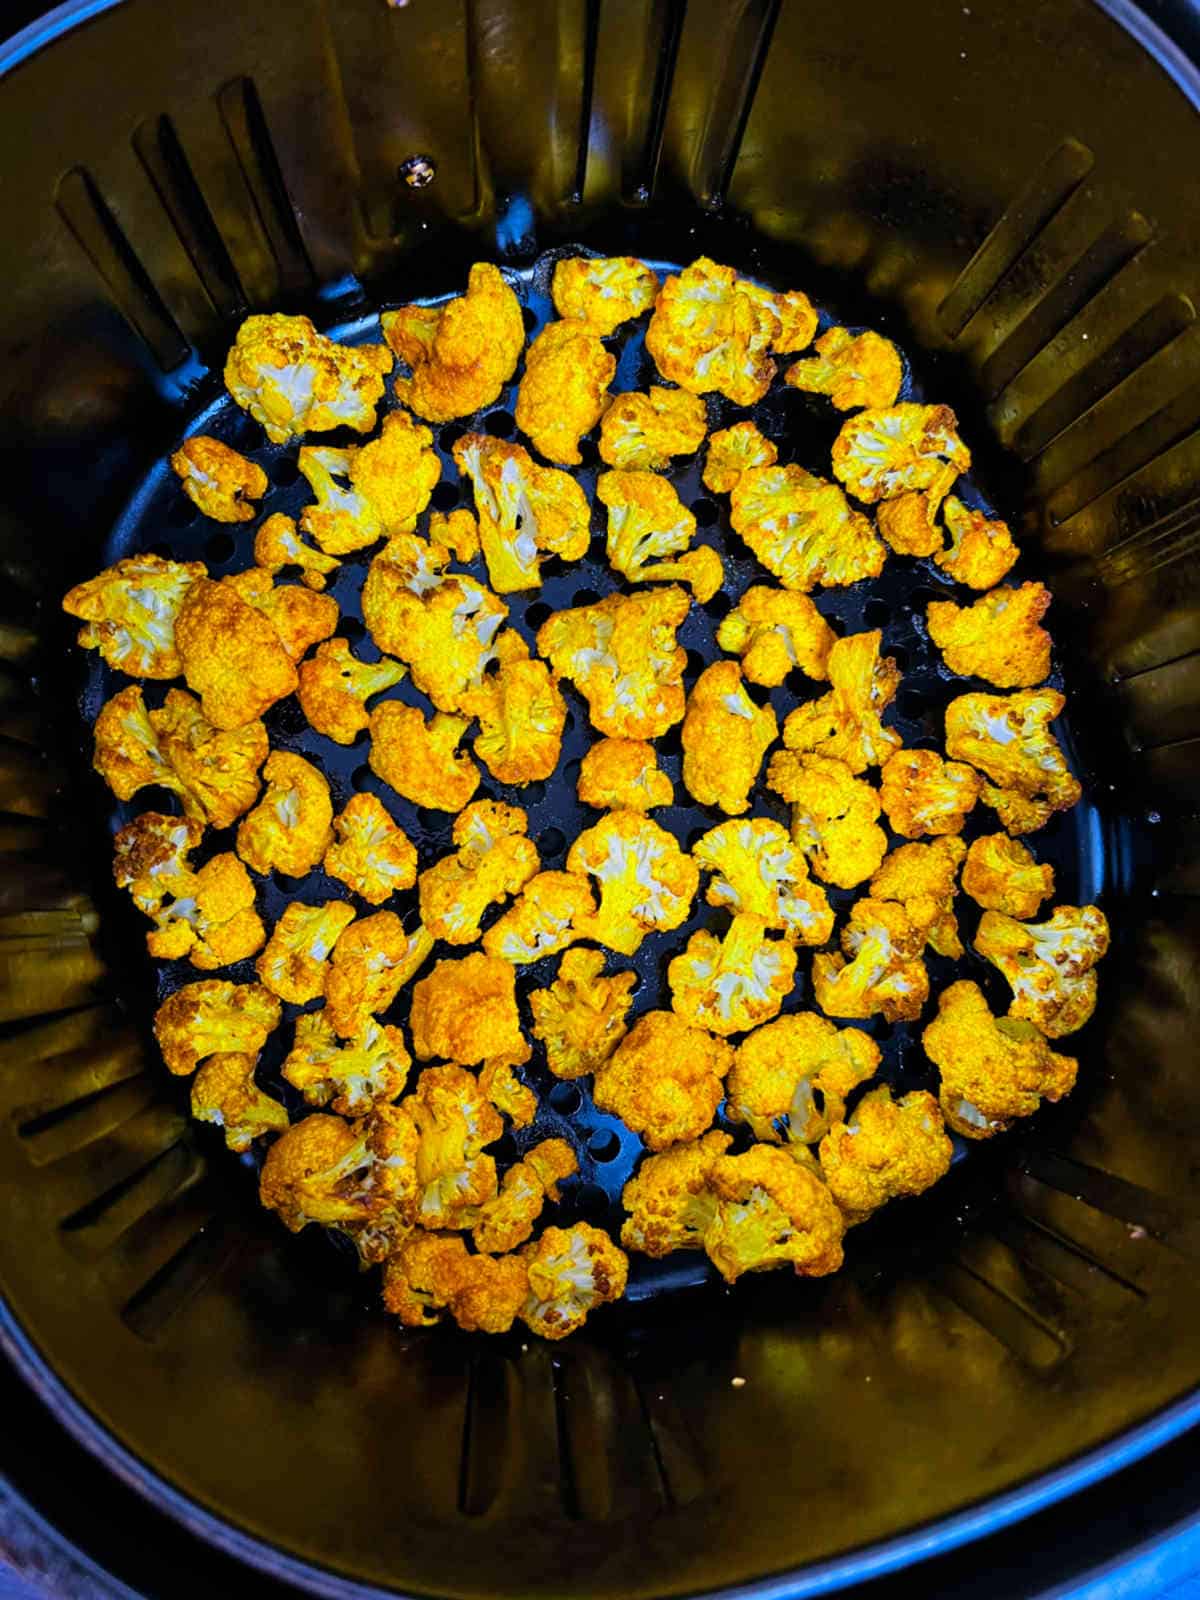 Crispy roasted florets in the air fryer basket.